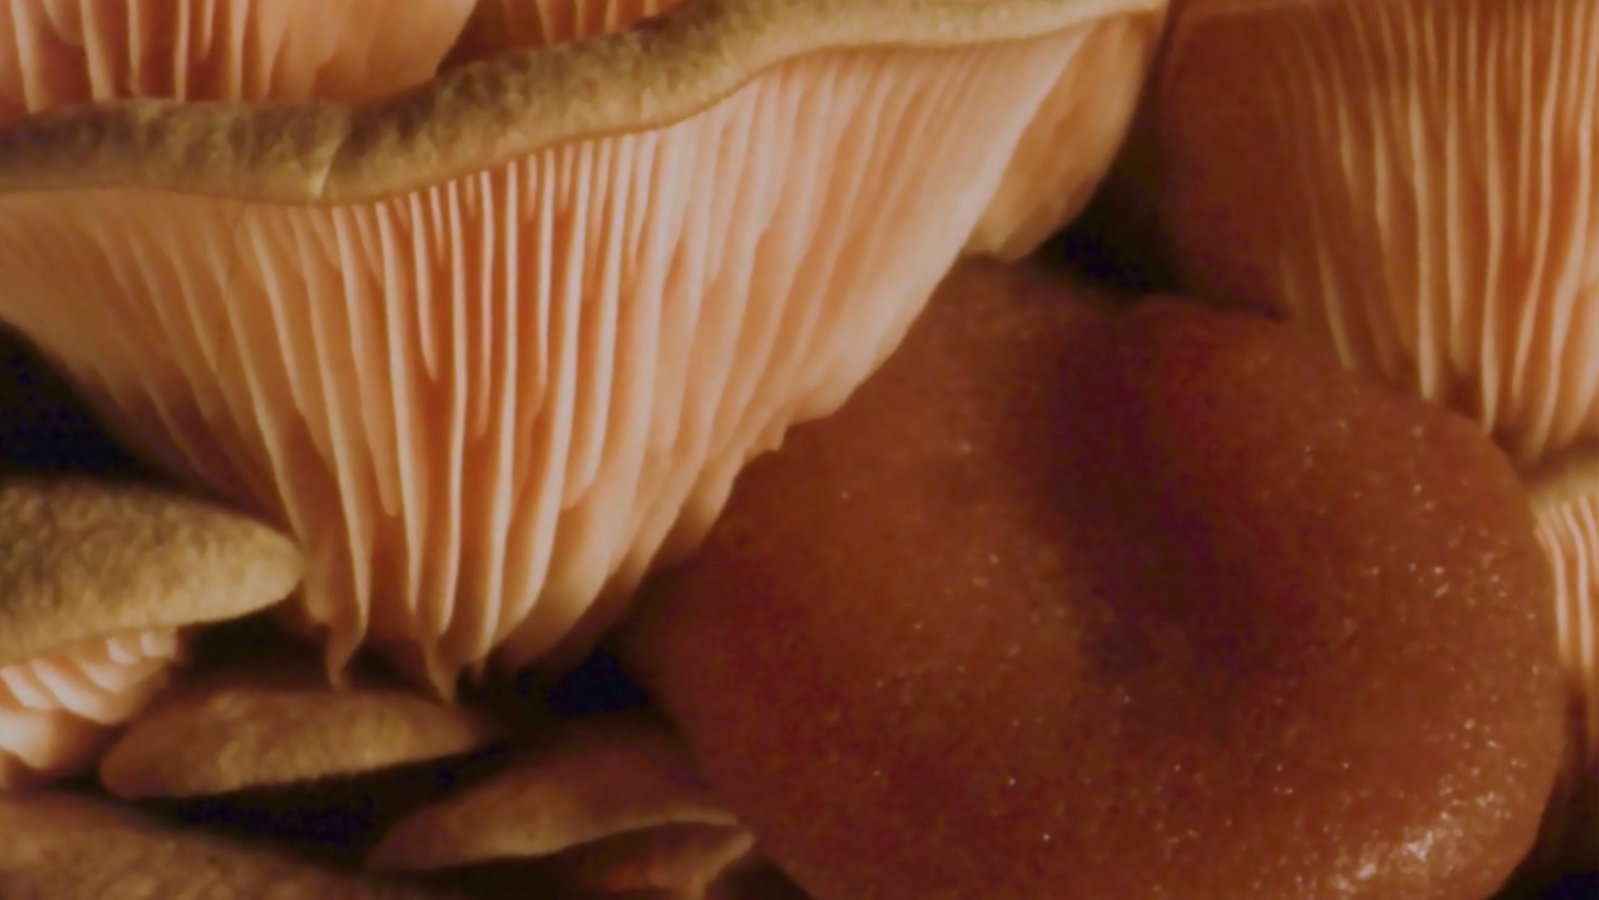 Extreme close-ups of brown mushrooms